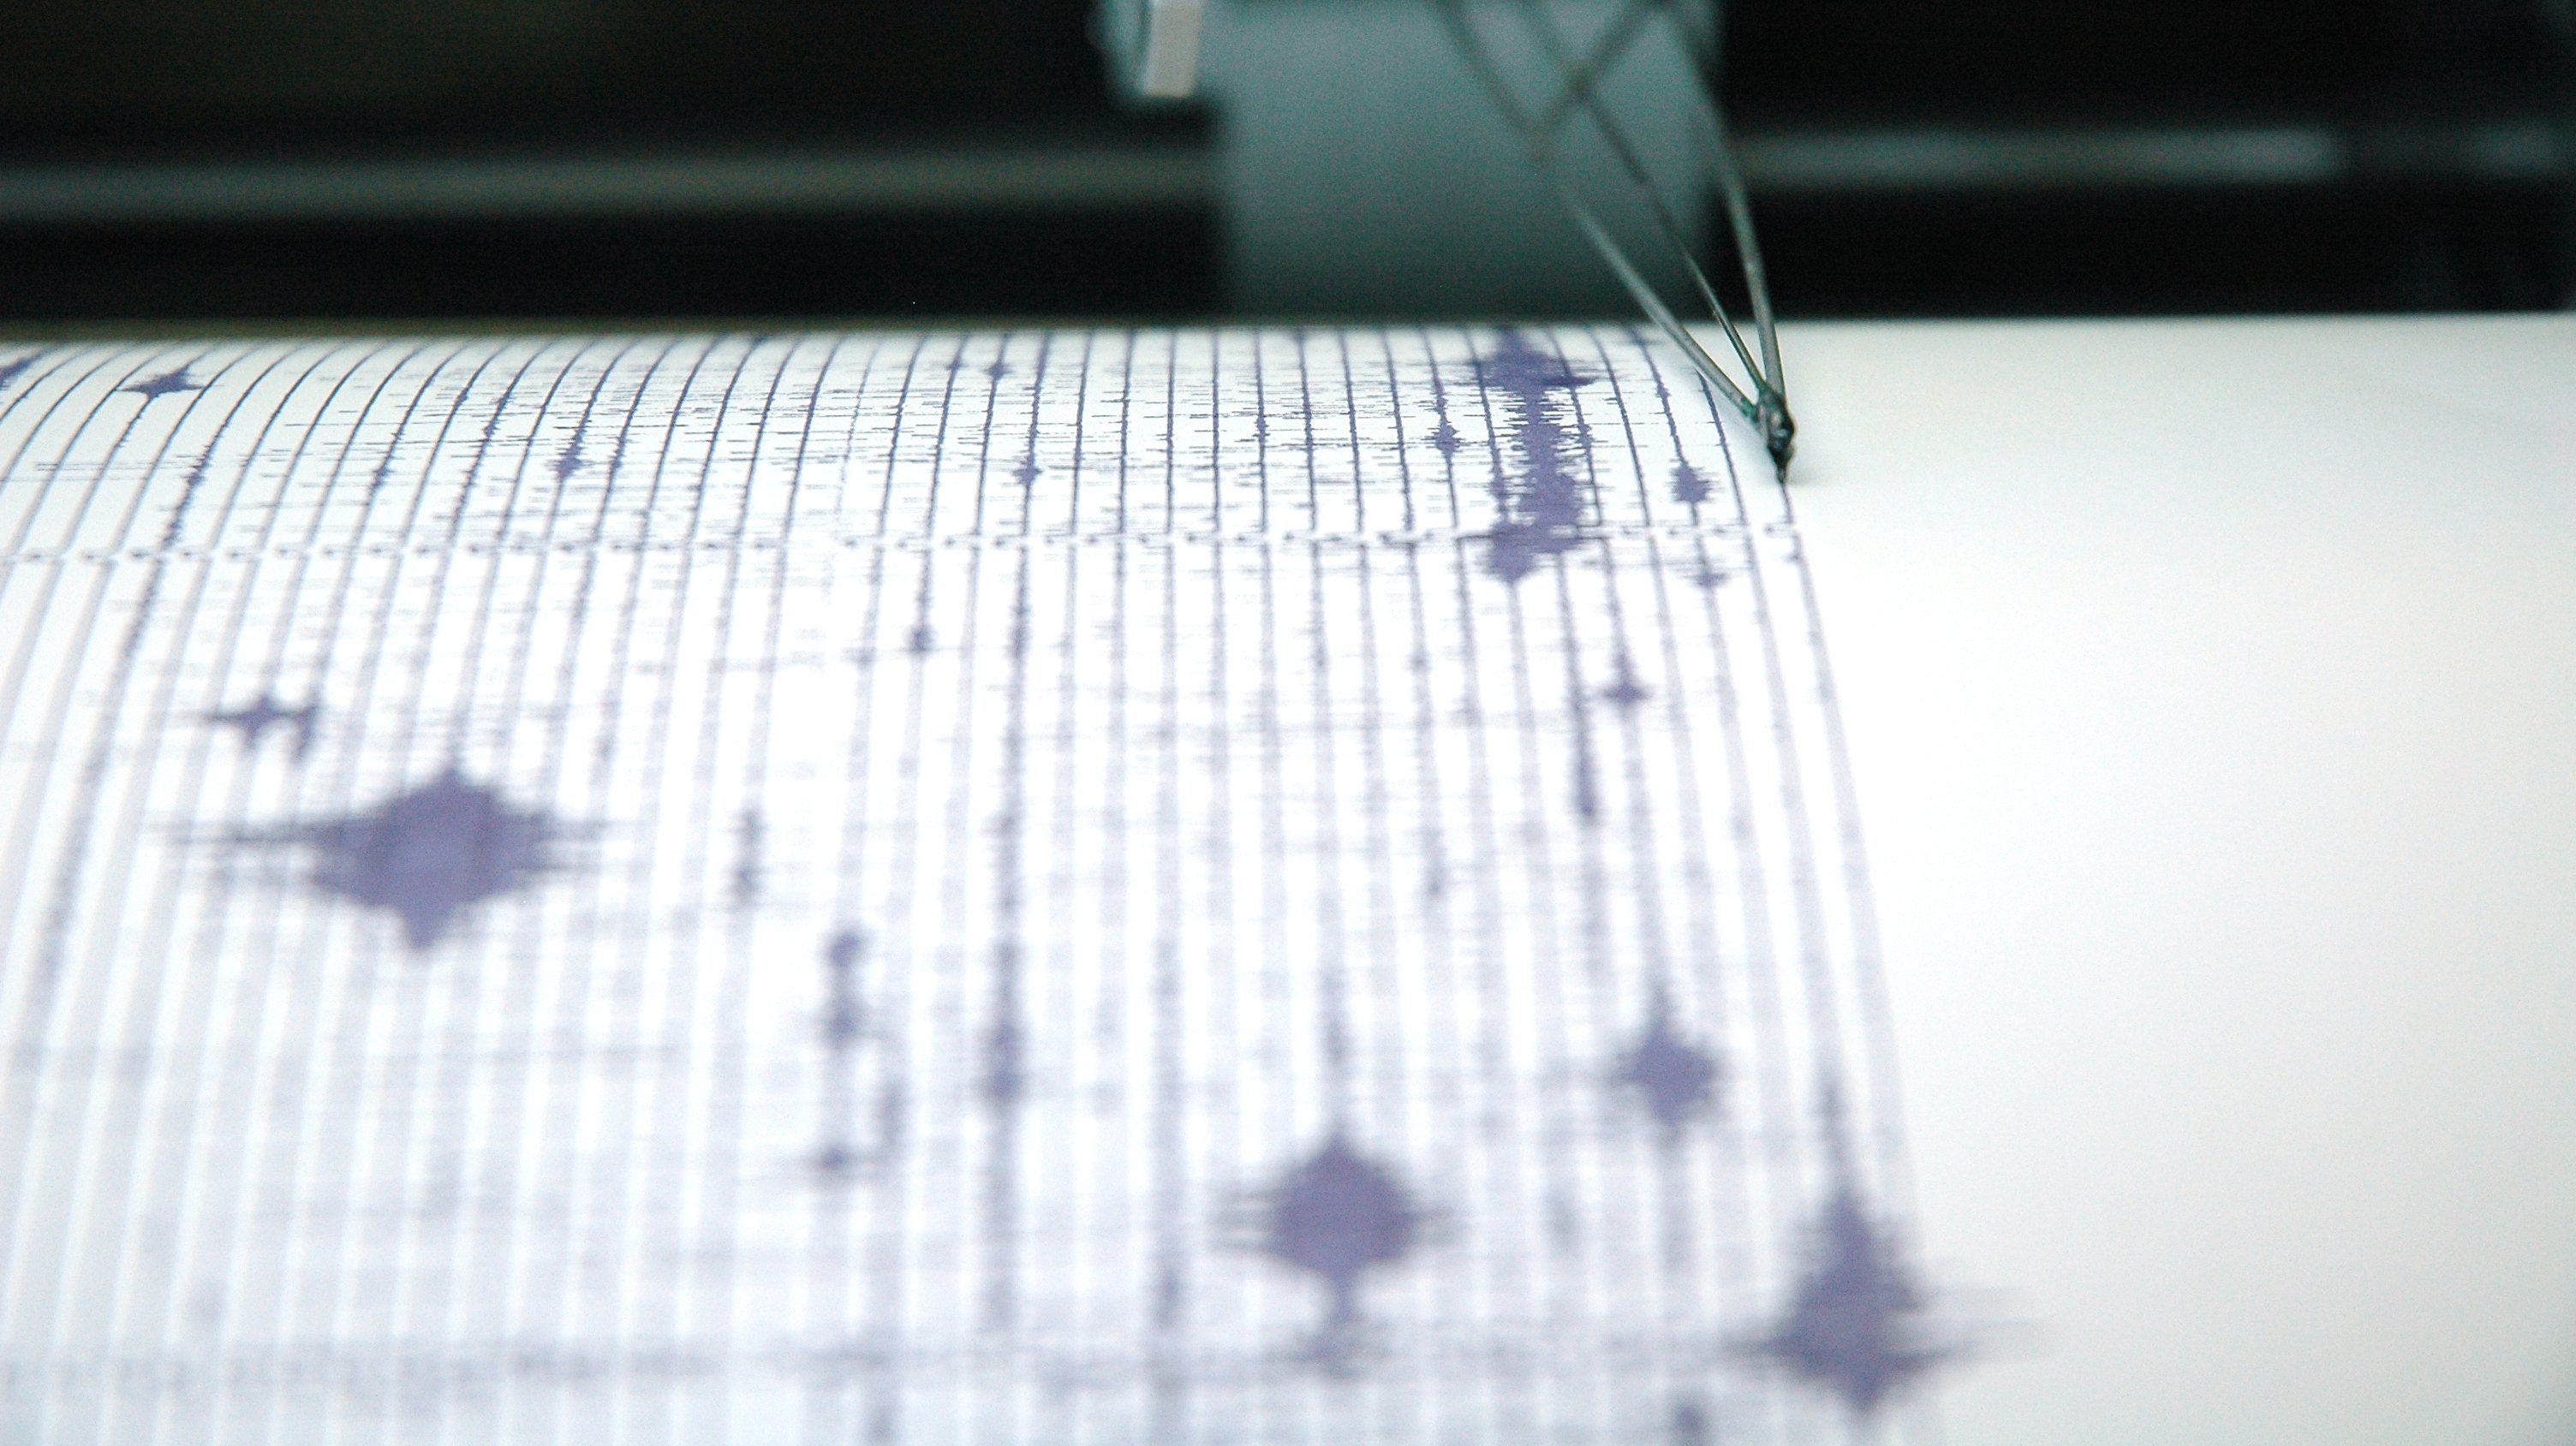 Earthquake seismogram recording by a seismograph image